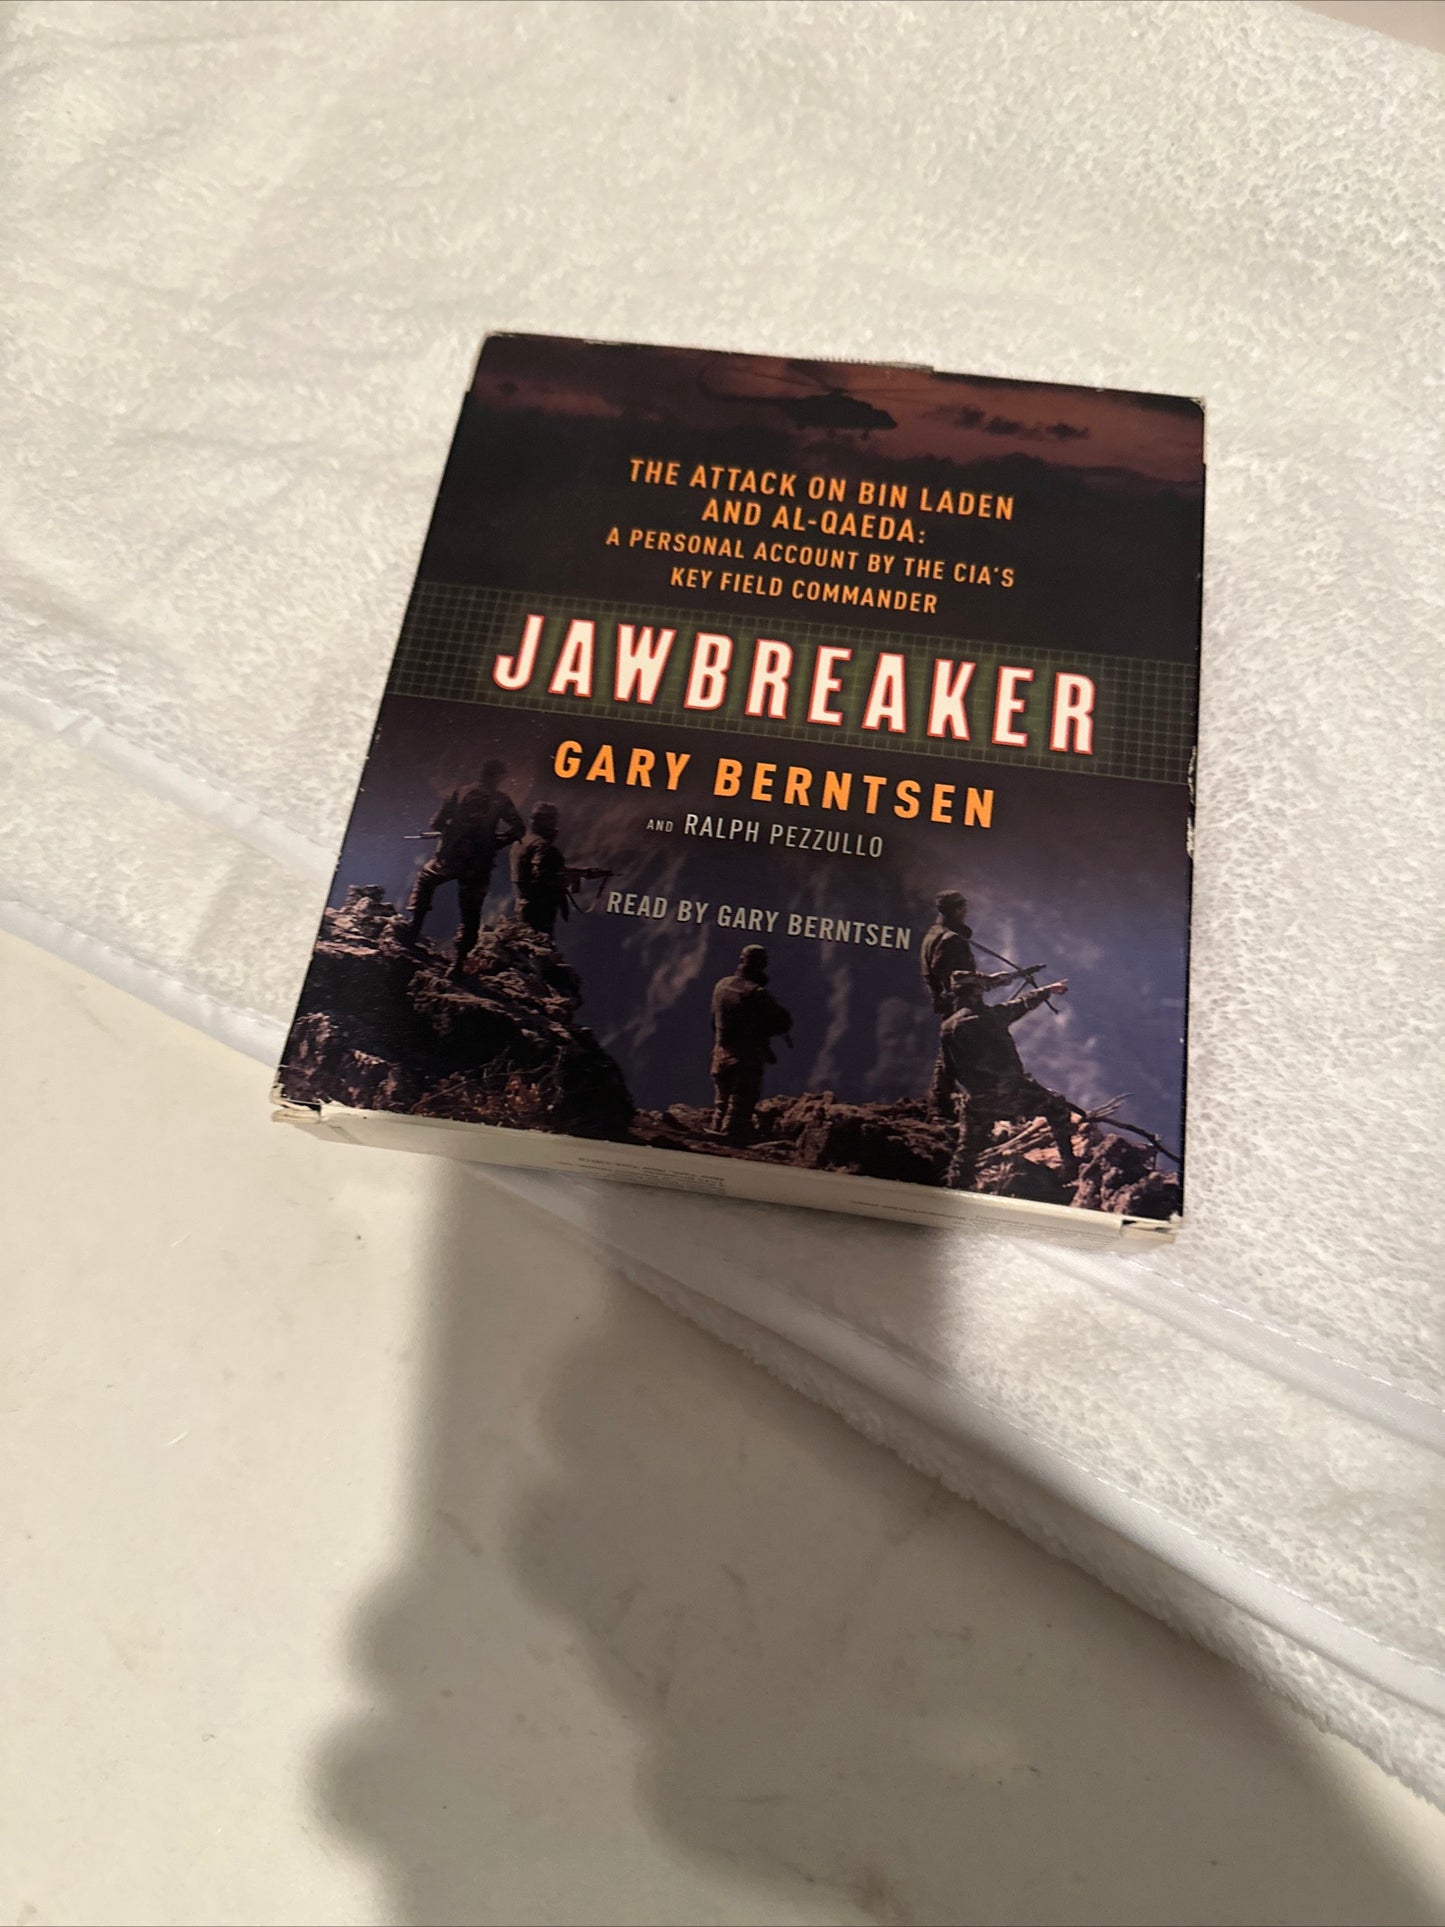 Jawbreaker unleashed a clandestand Odyssey